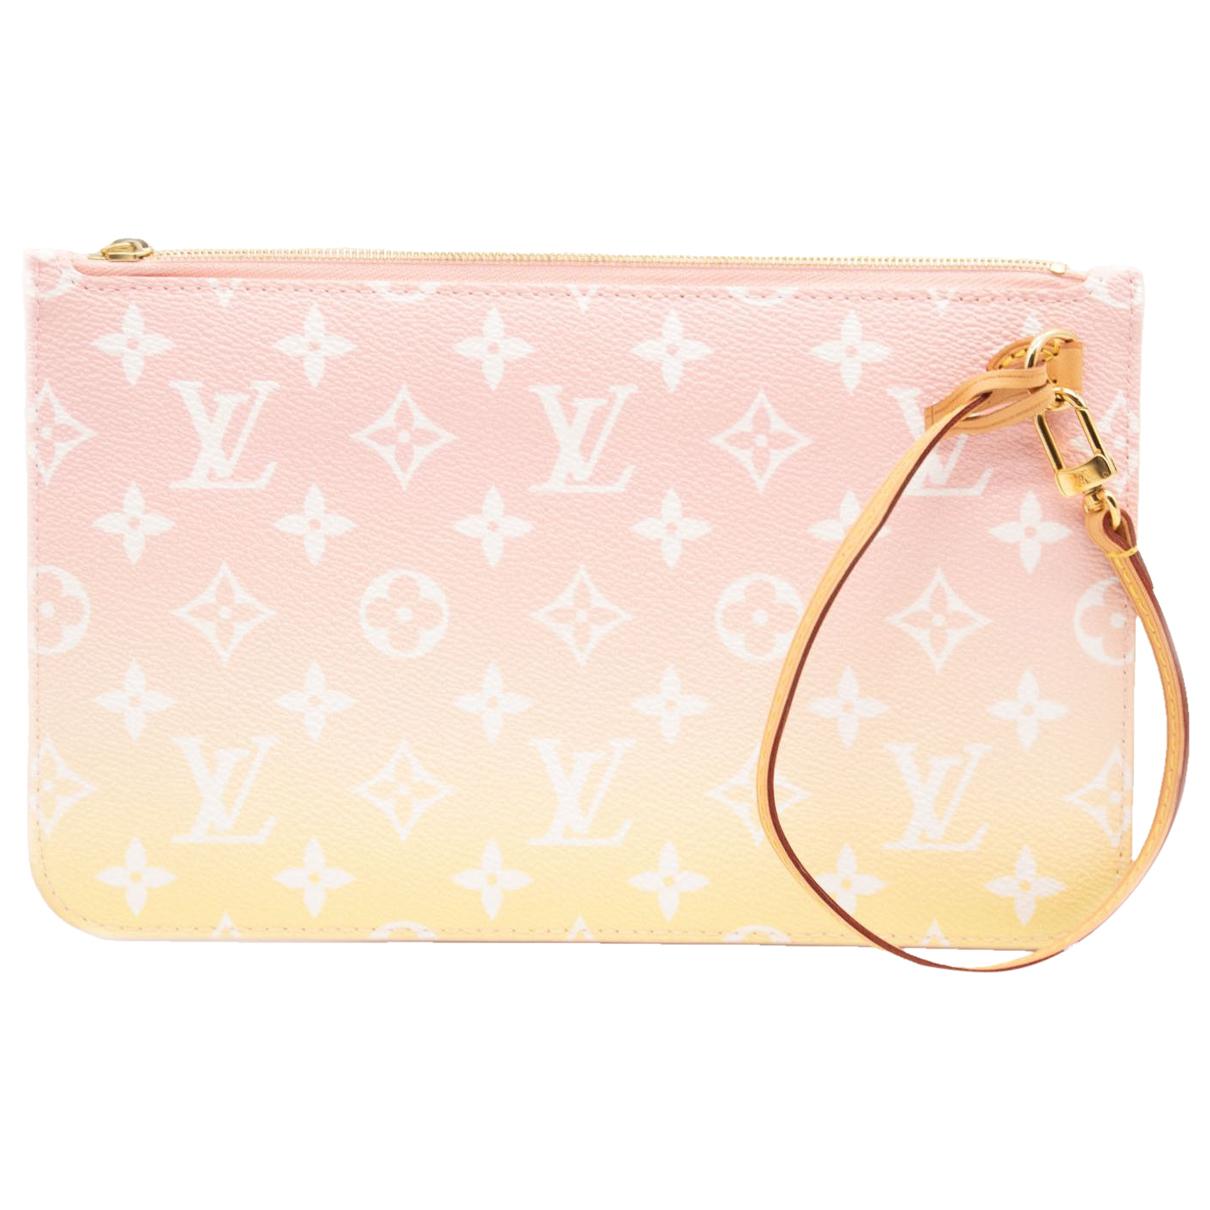 Néo speedy leather handbag Louis Vuitton Pink in Leather - 30663283